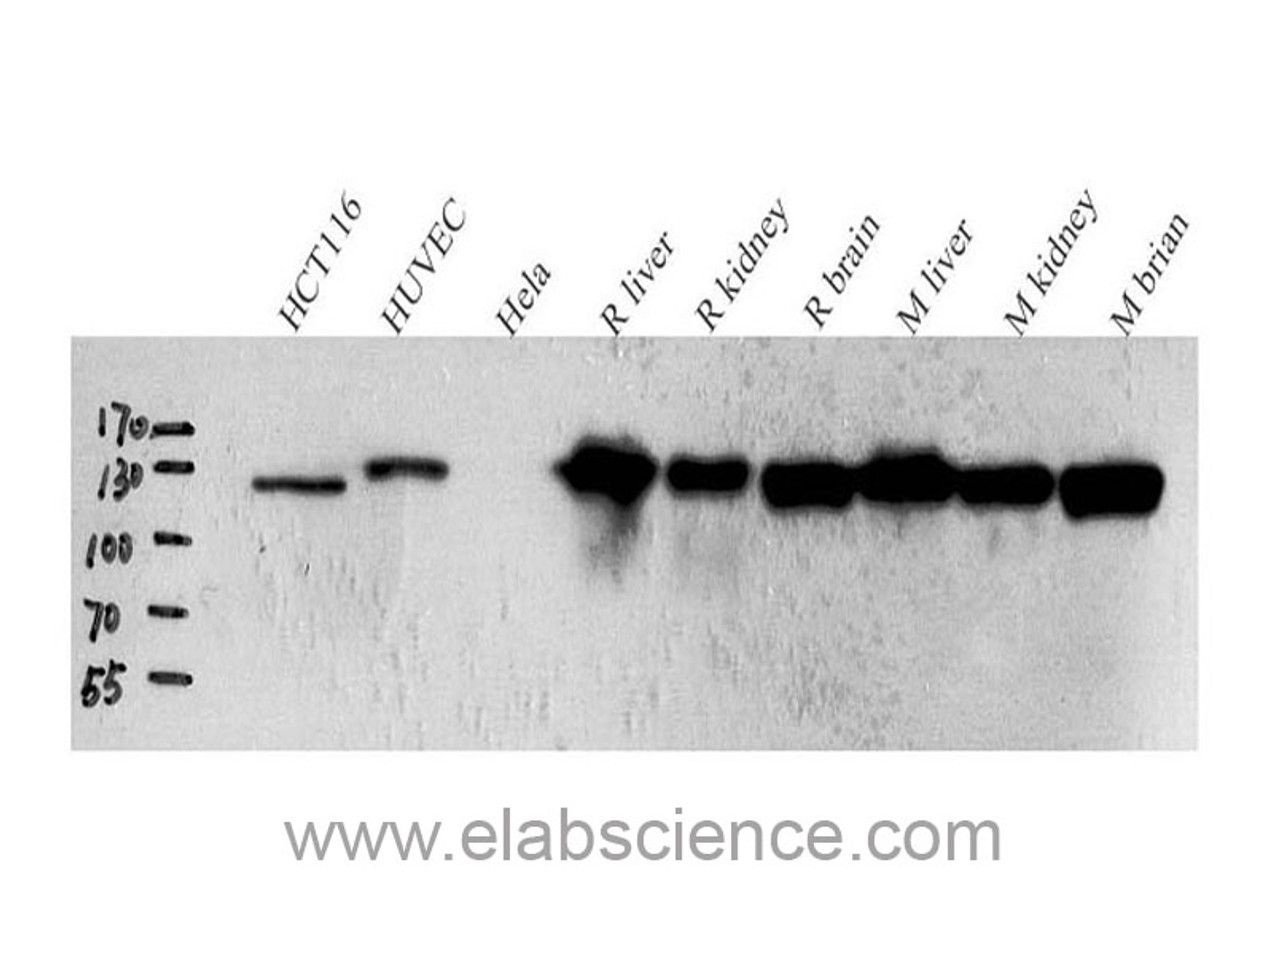 Western Blot analysis of various samples using N-cadherin Polyclonal Antibody at dilution of 1:1000.